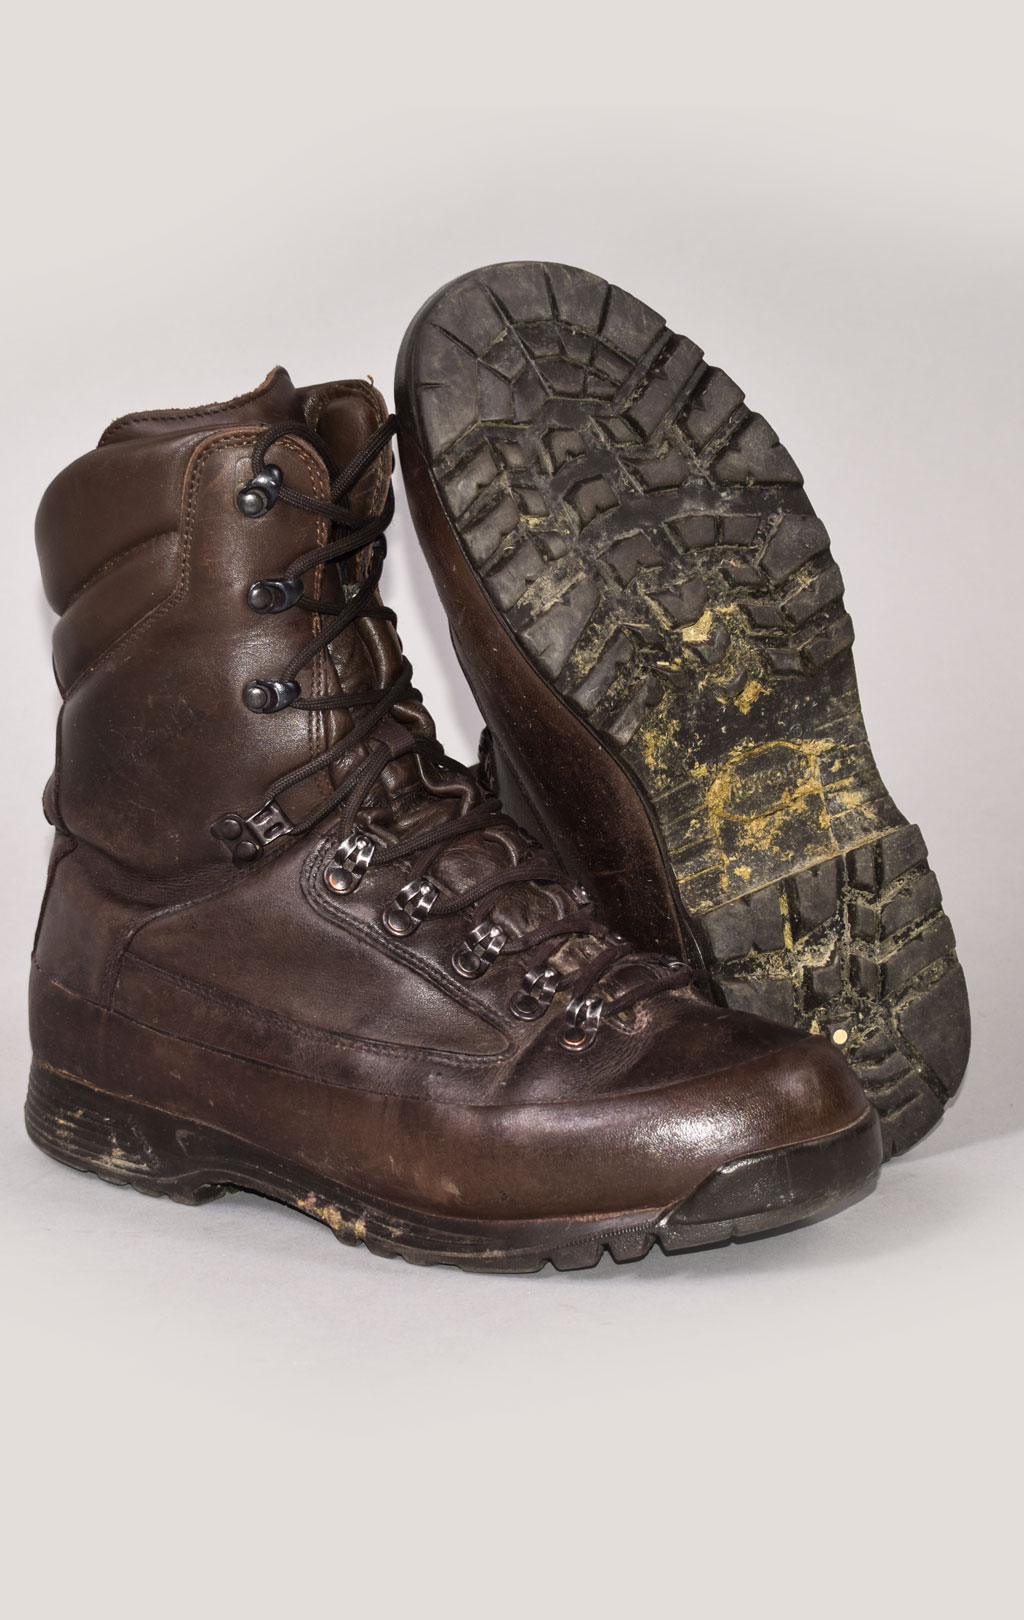 Ботинки-берцы KARRIMOR Gore-Tex COMBAT Boots кожа brown б/у 